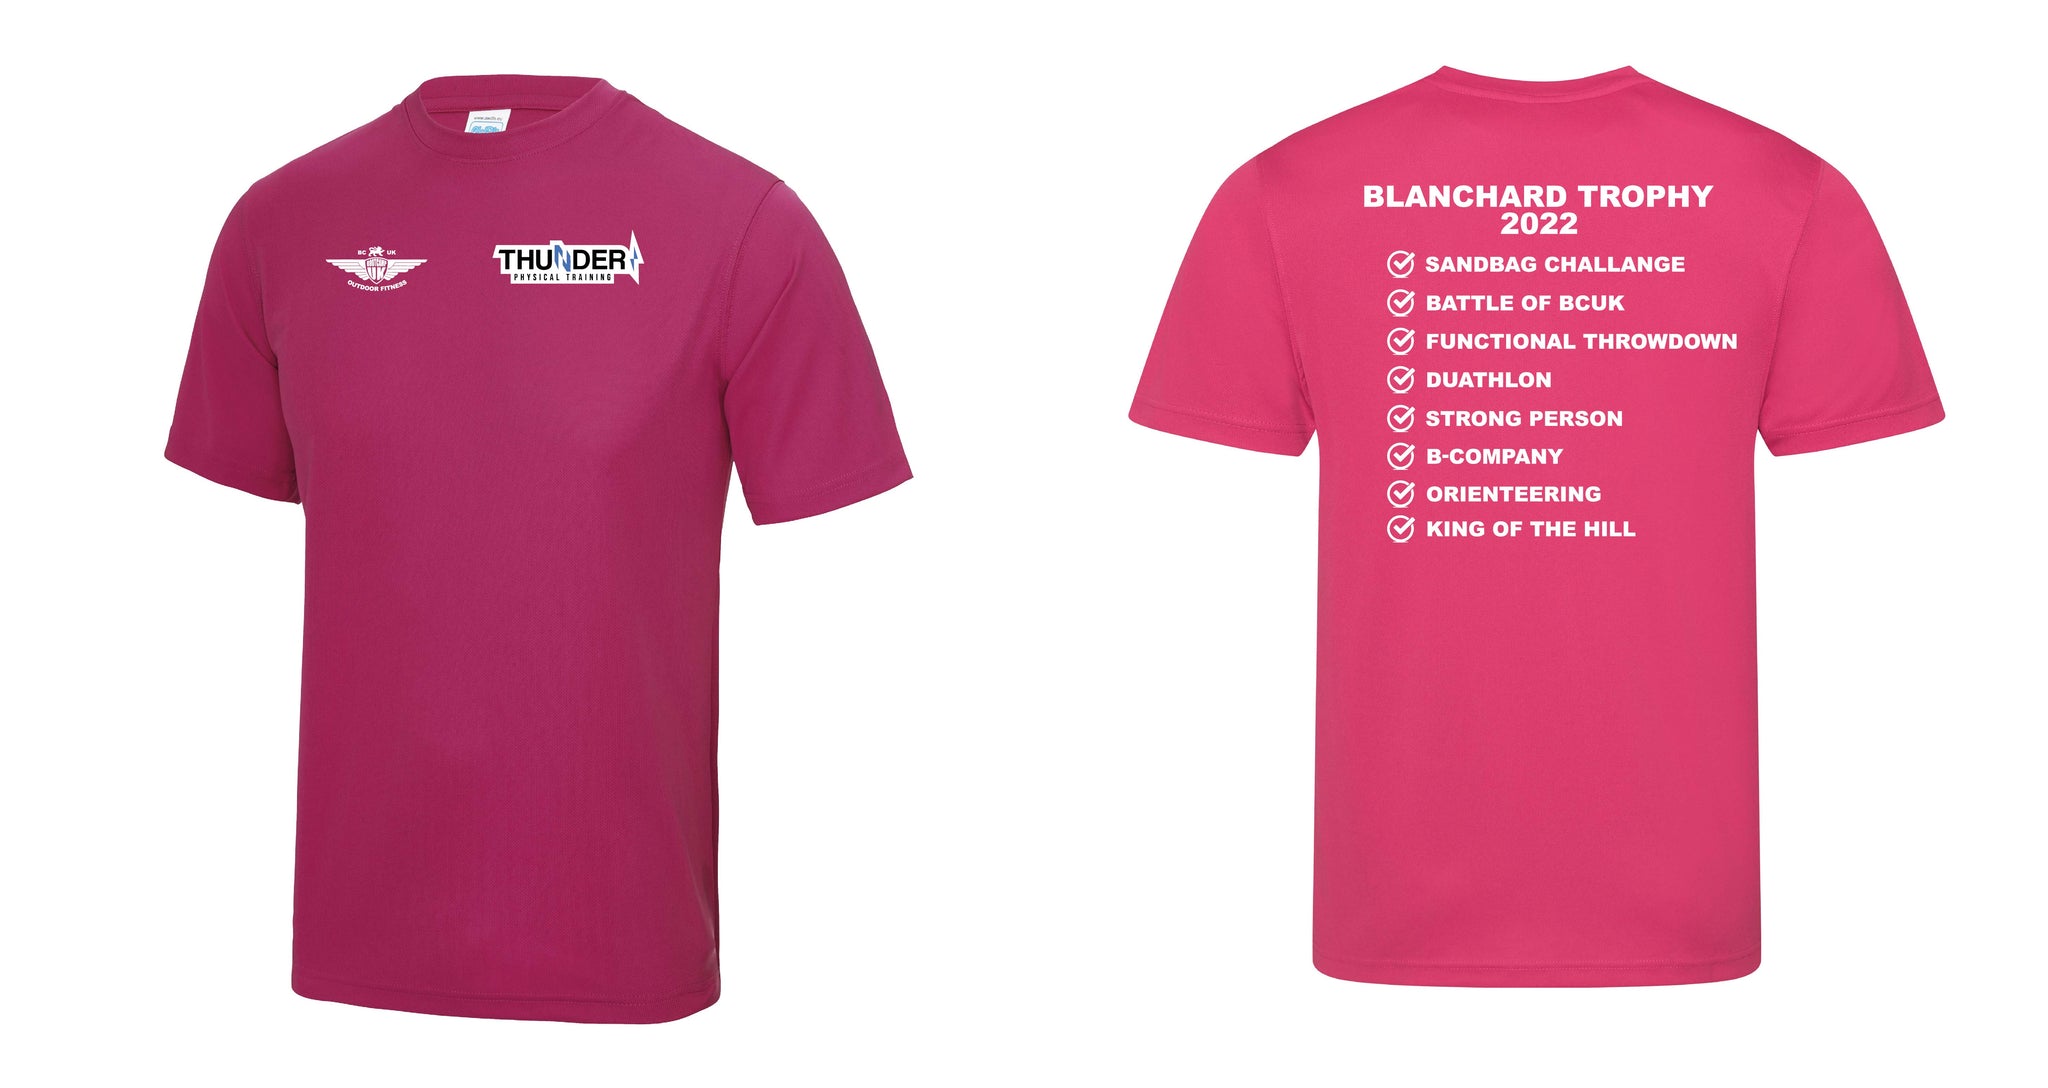 Blanchard Trophy 2022 T Shirt